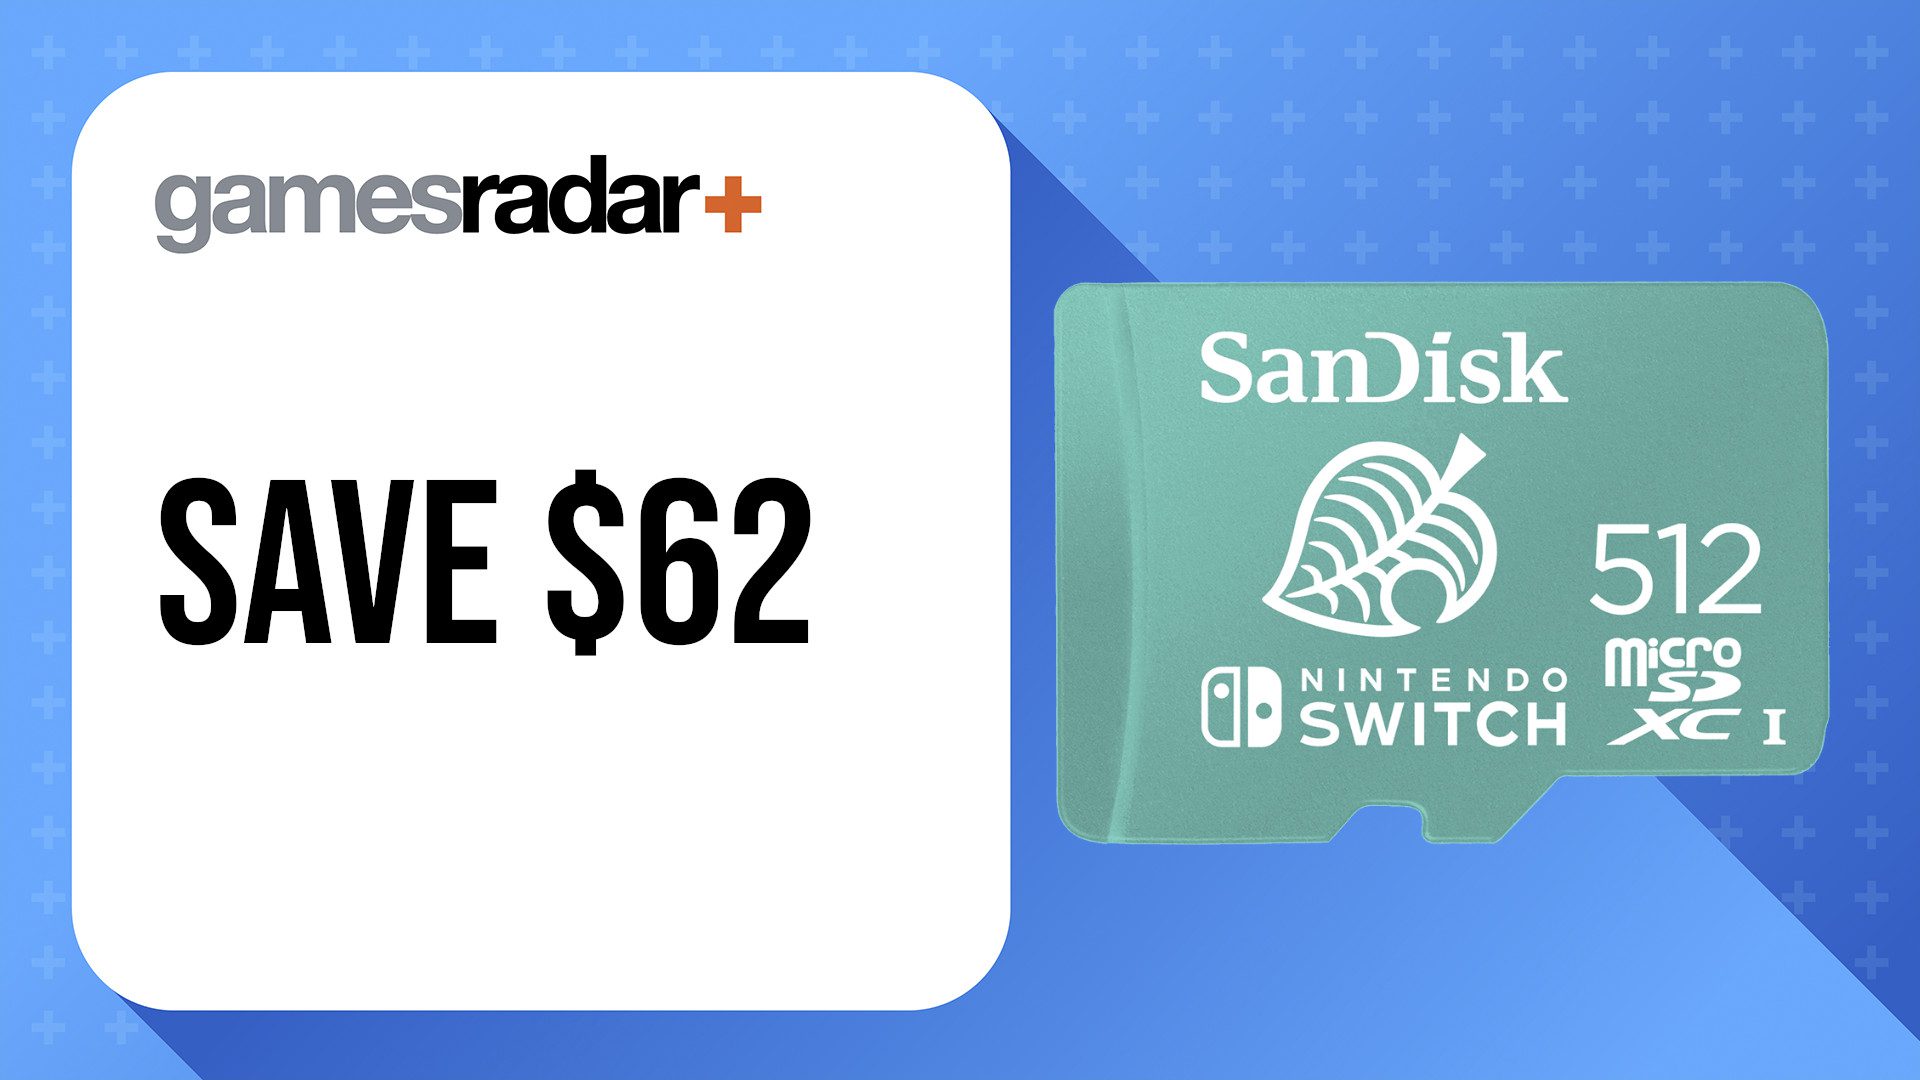 Oferta de tarjeta de memoria de Nintendo Switch